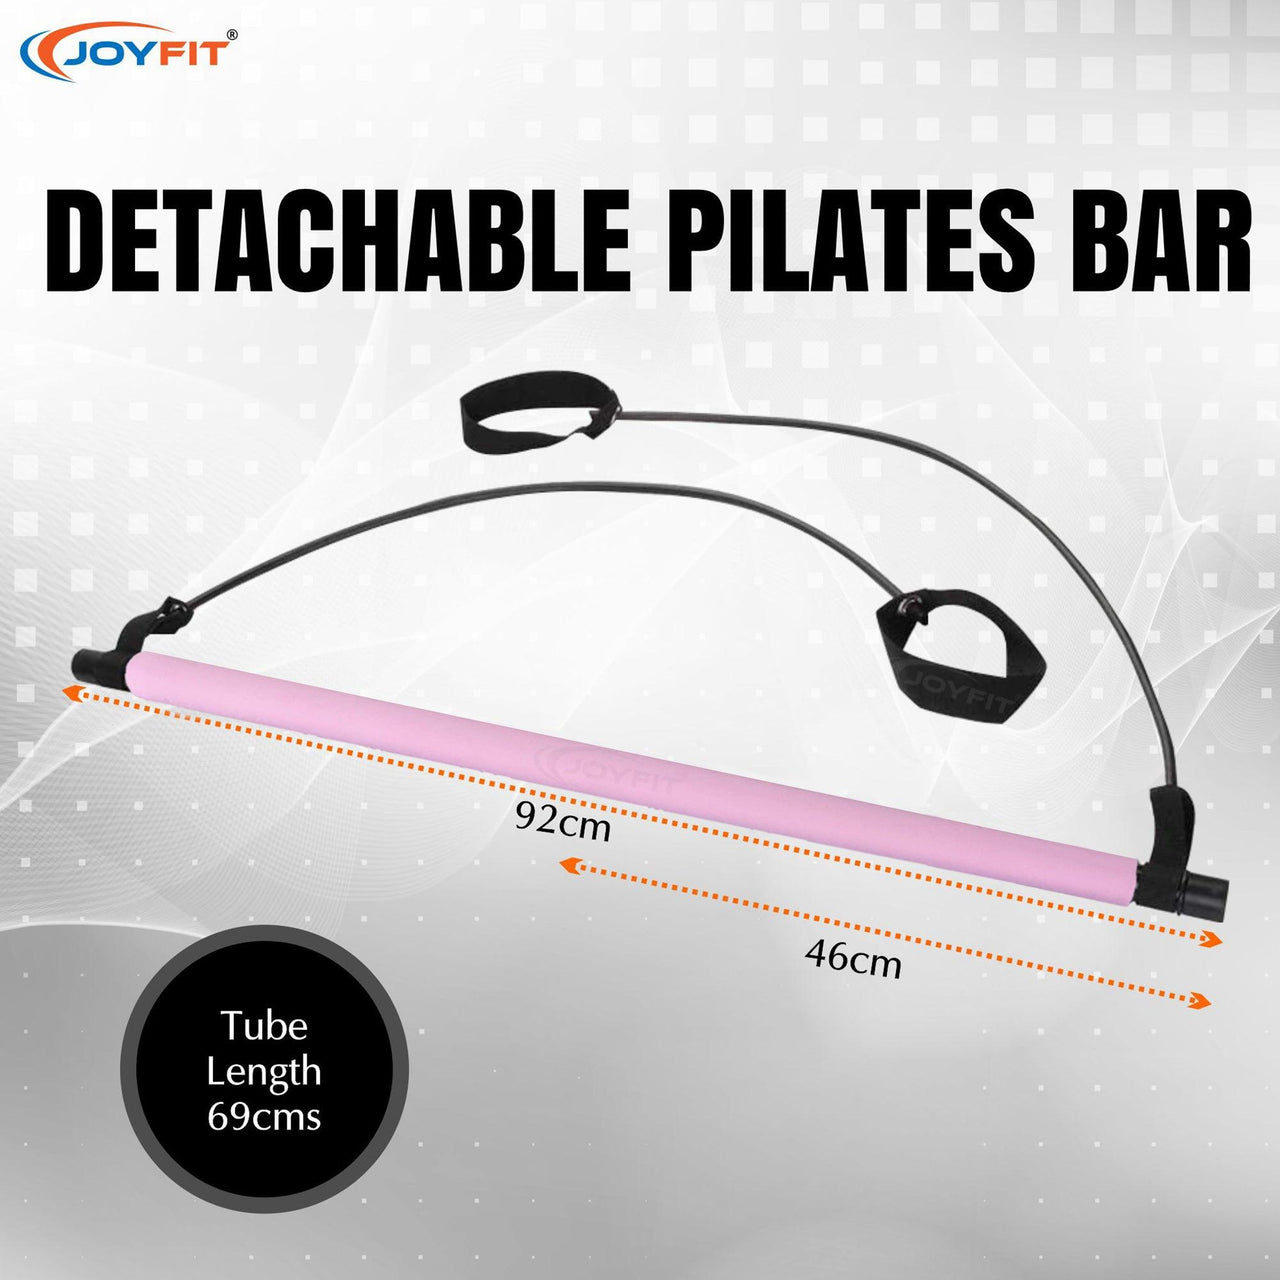 Detachable Pilates Bar - Joyfit